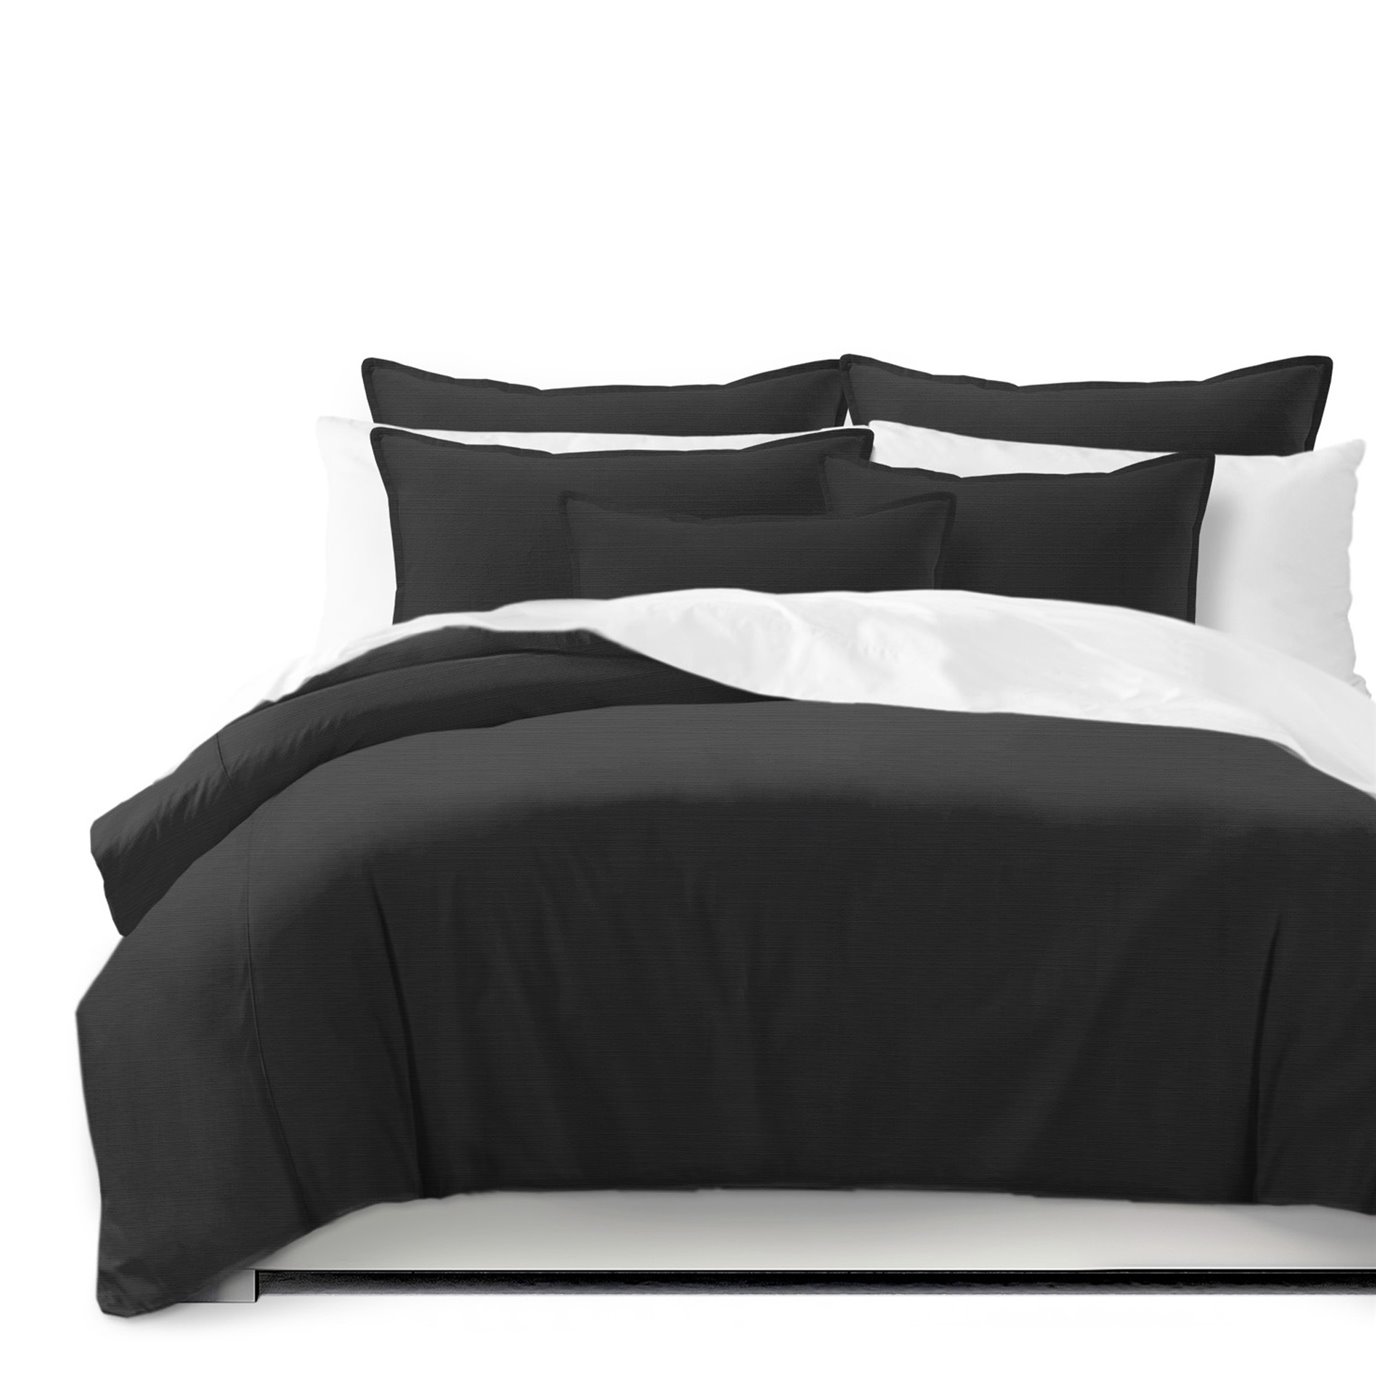 Nova Black Coverlet and Pillow Sham(s) Set - Size Queen